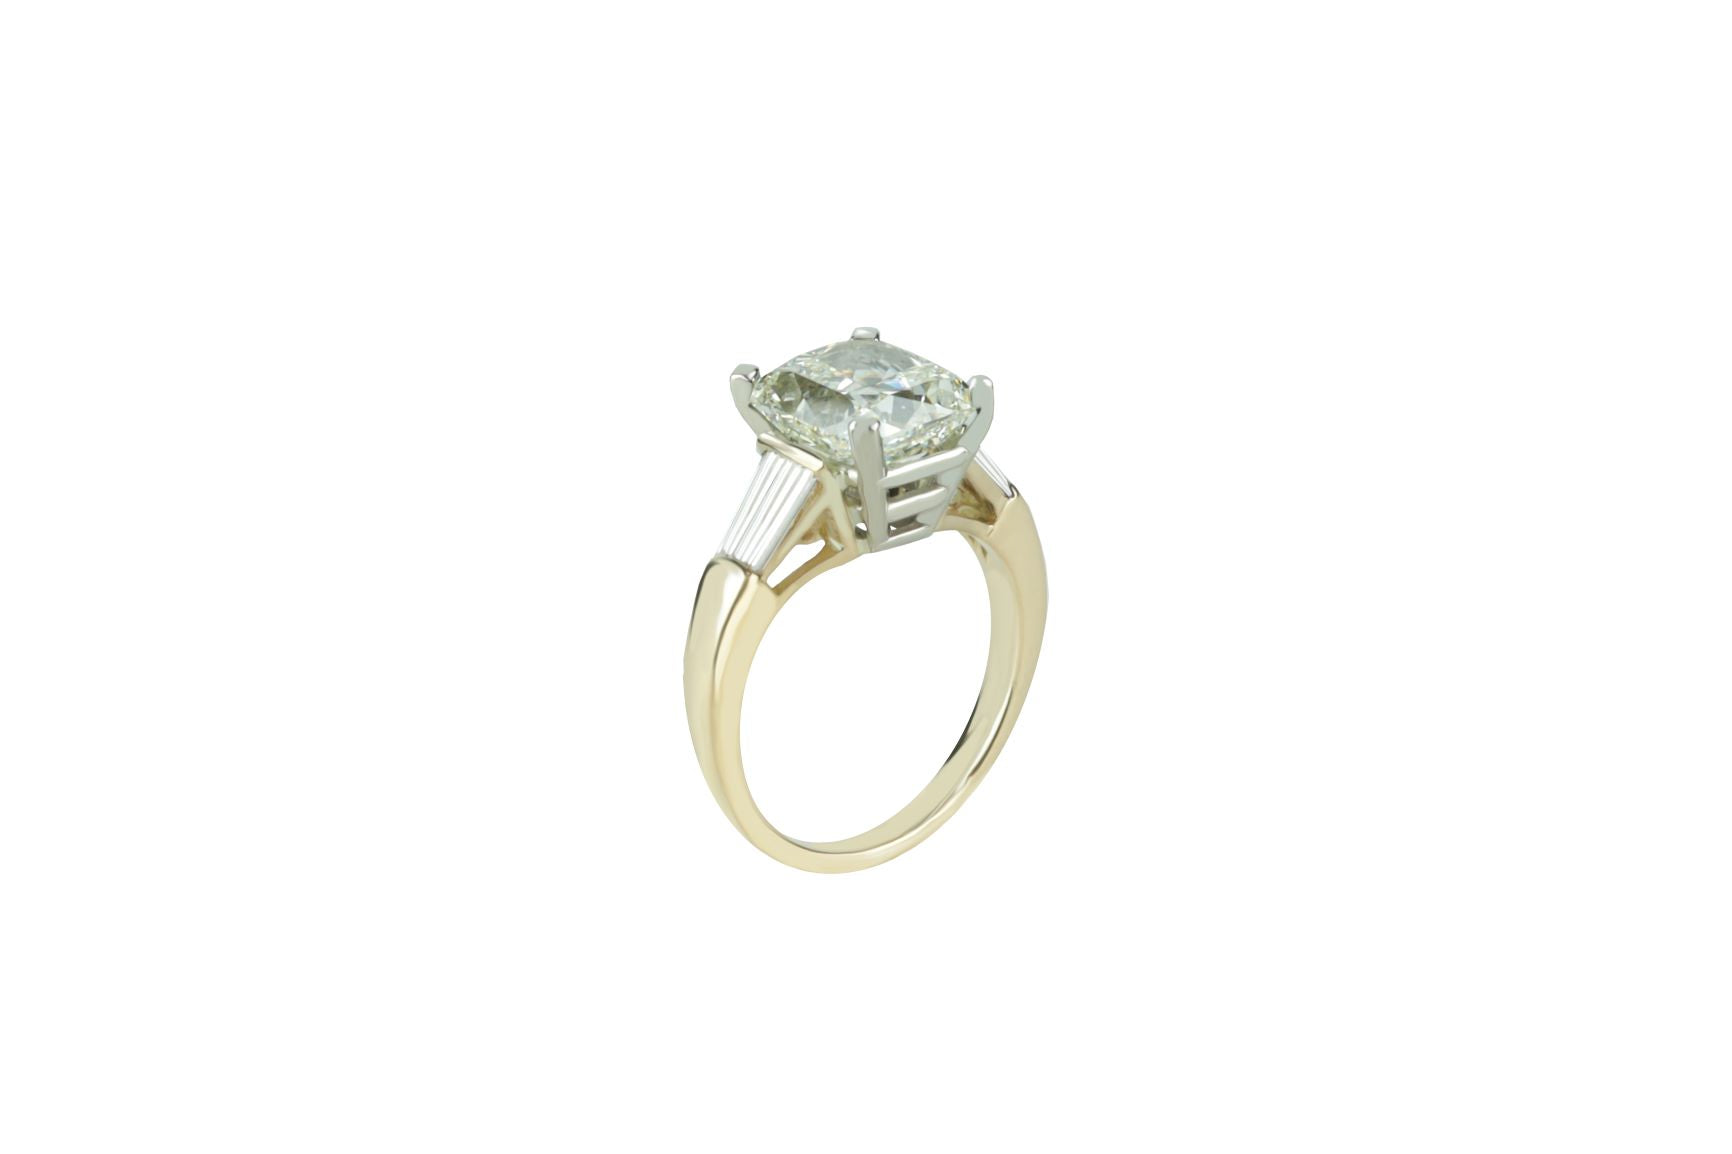 4.5 ctw GIA Certified Cushion Cut Diamond Engagement Ring 18k